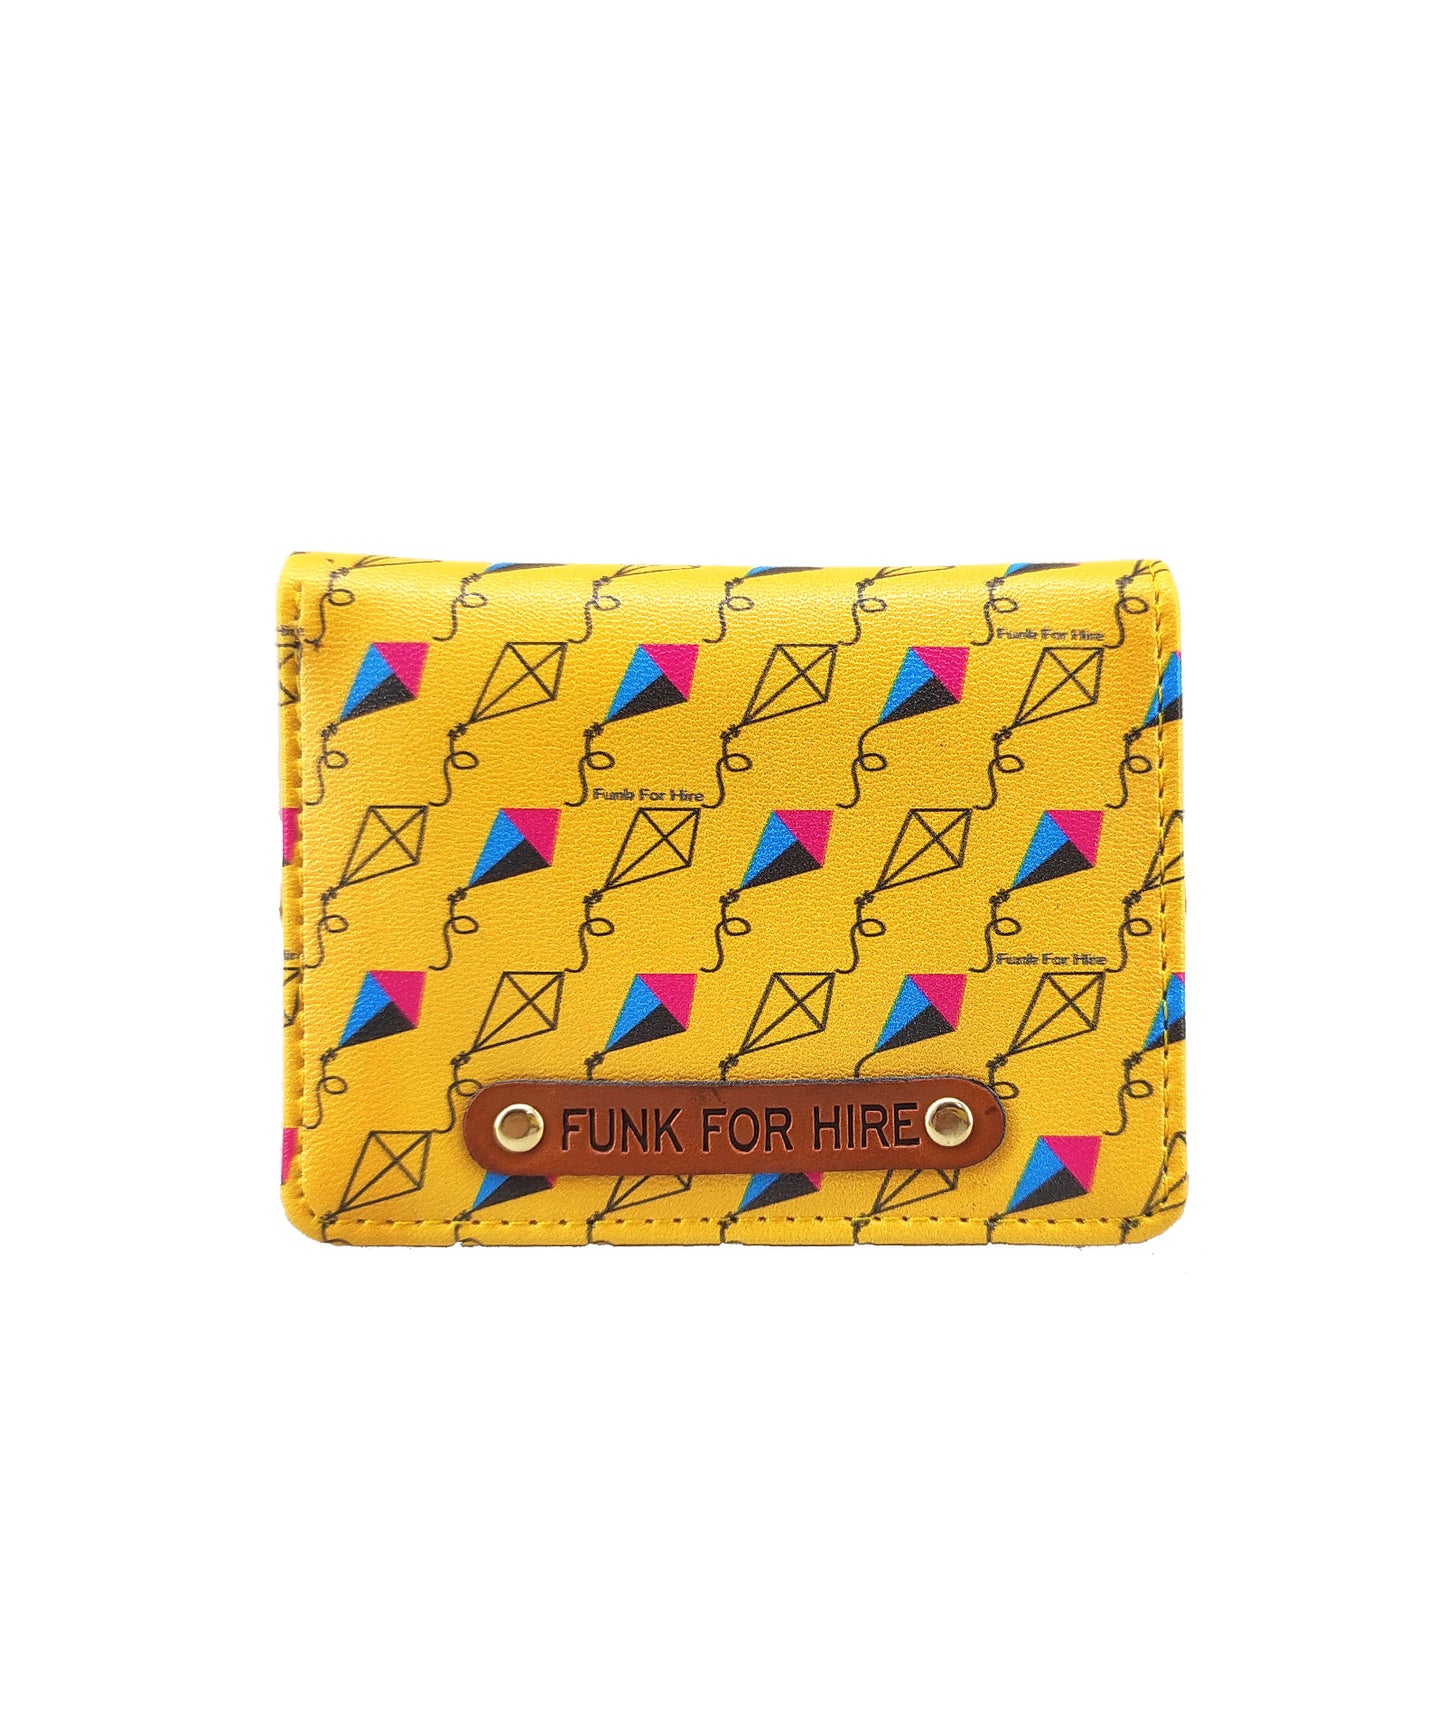 Combo Offers : Music Wall Loop Purple & Pocket Kite Wallet Yellow